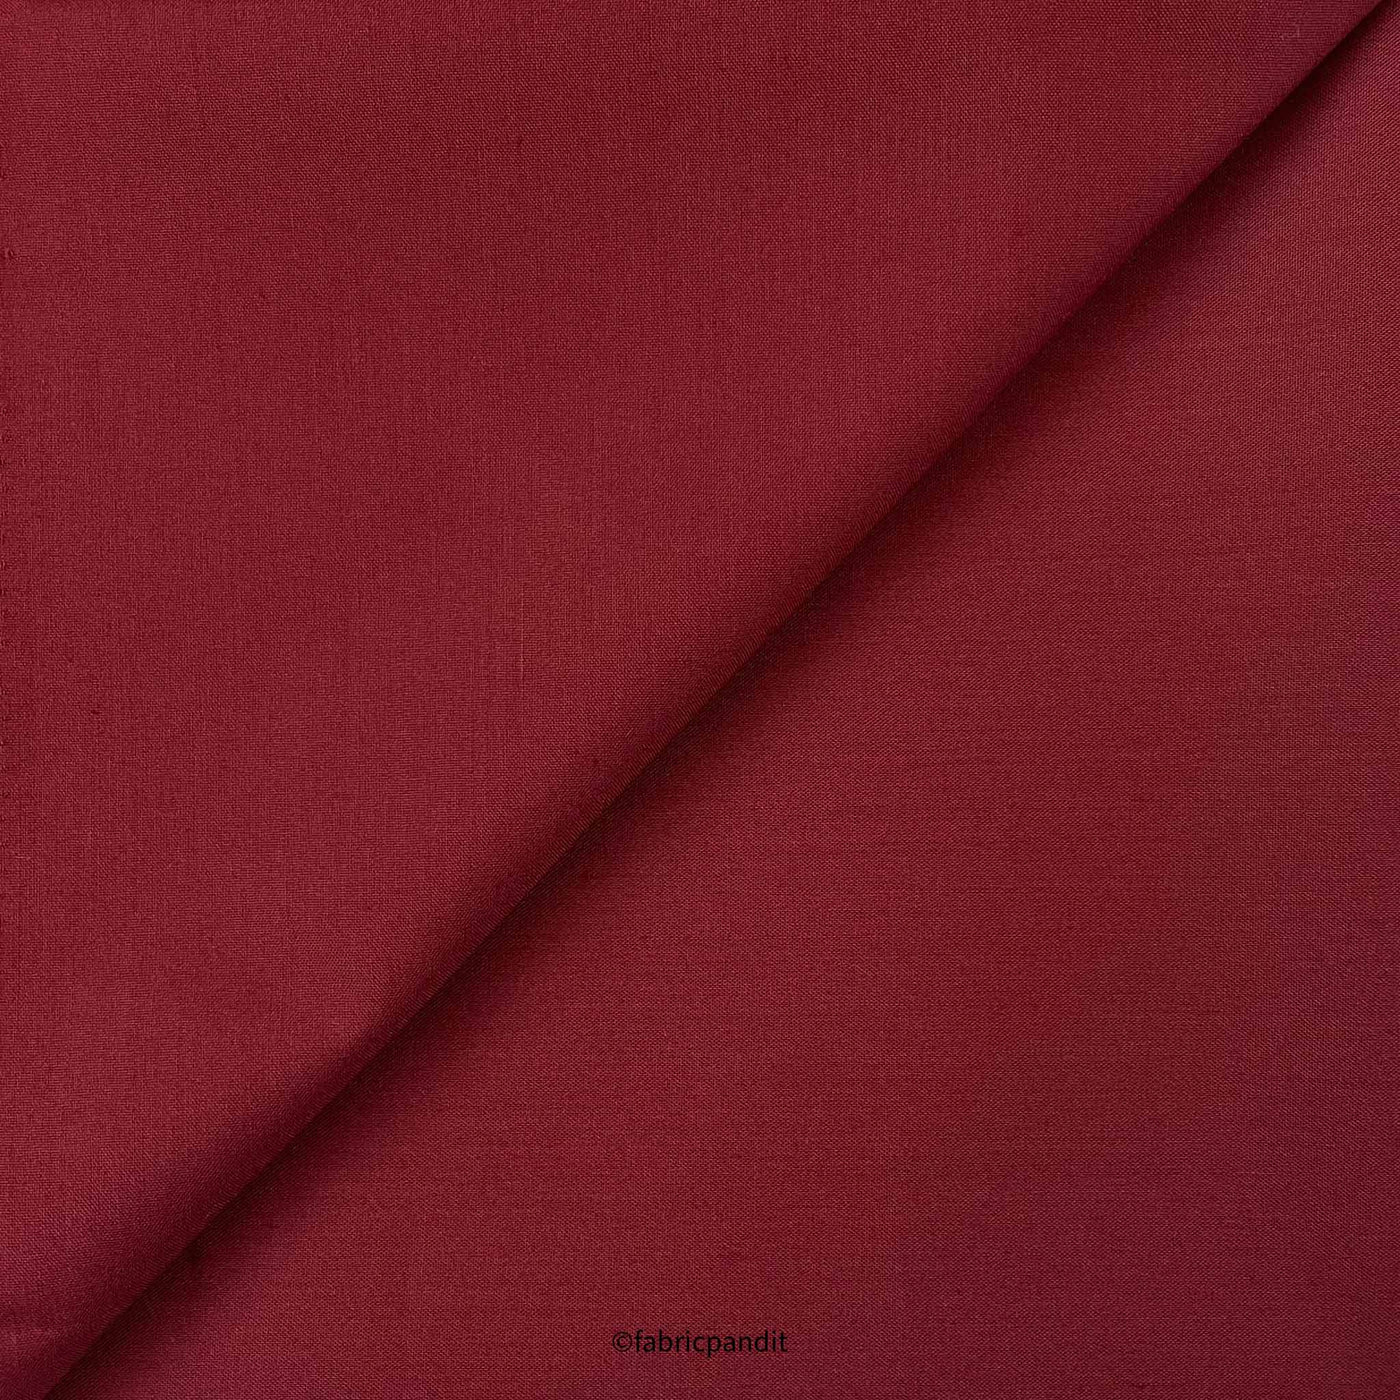 Fabric Pandit Cut Piece (CUT PIECE) Merlot Red Cotton Fabric (Width 58 Inch)